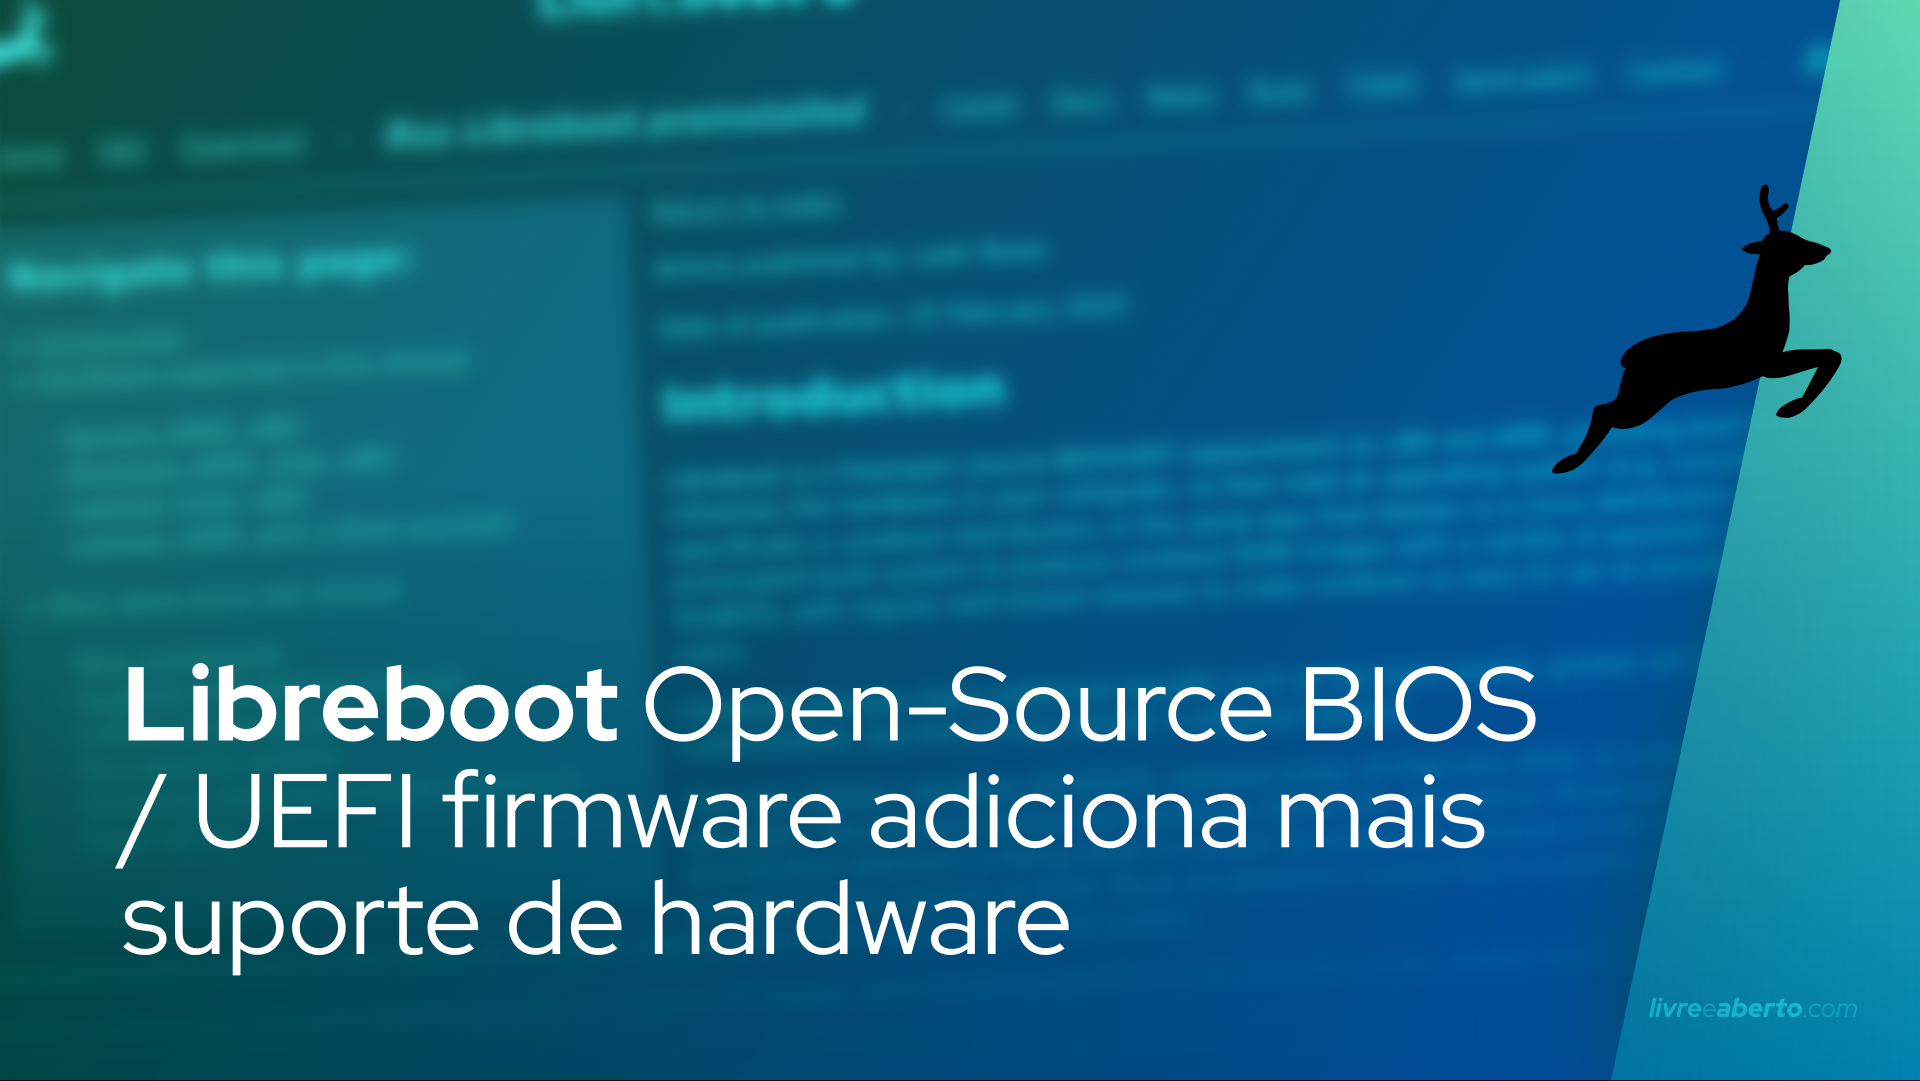 Libreboot Open-Source BIOS / UEFI firmware adiciona mais suporte de hardware